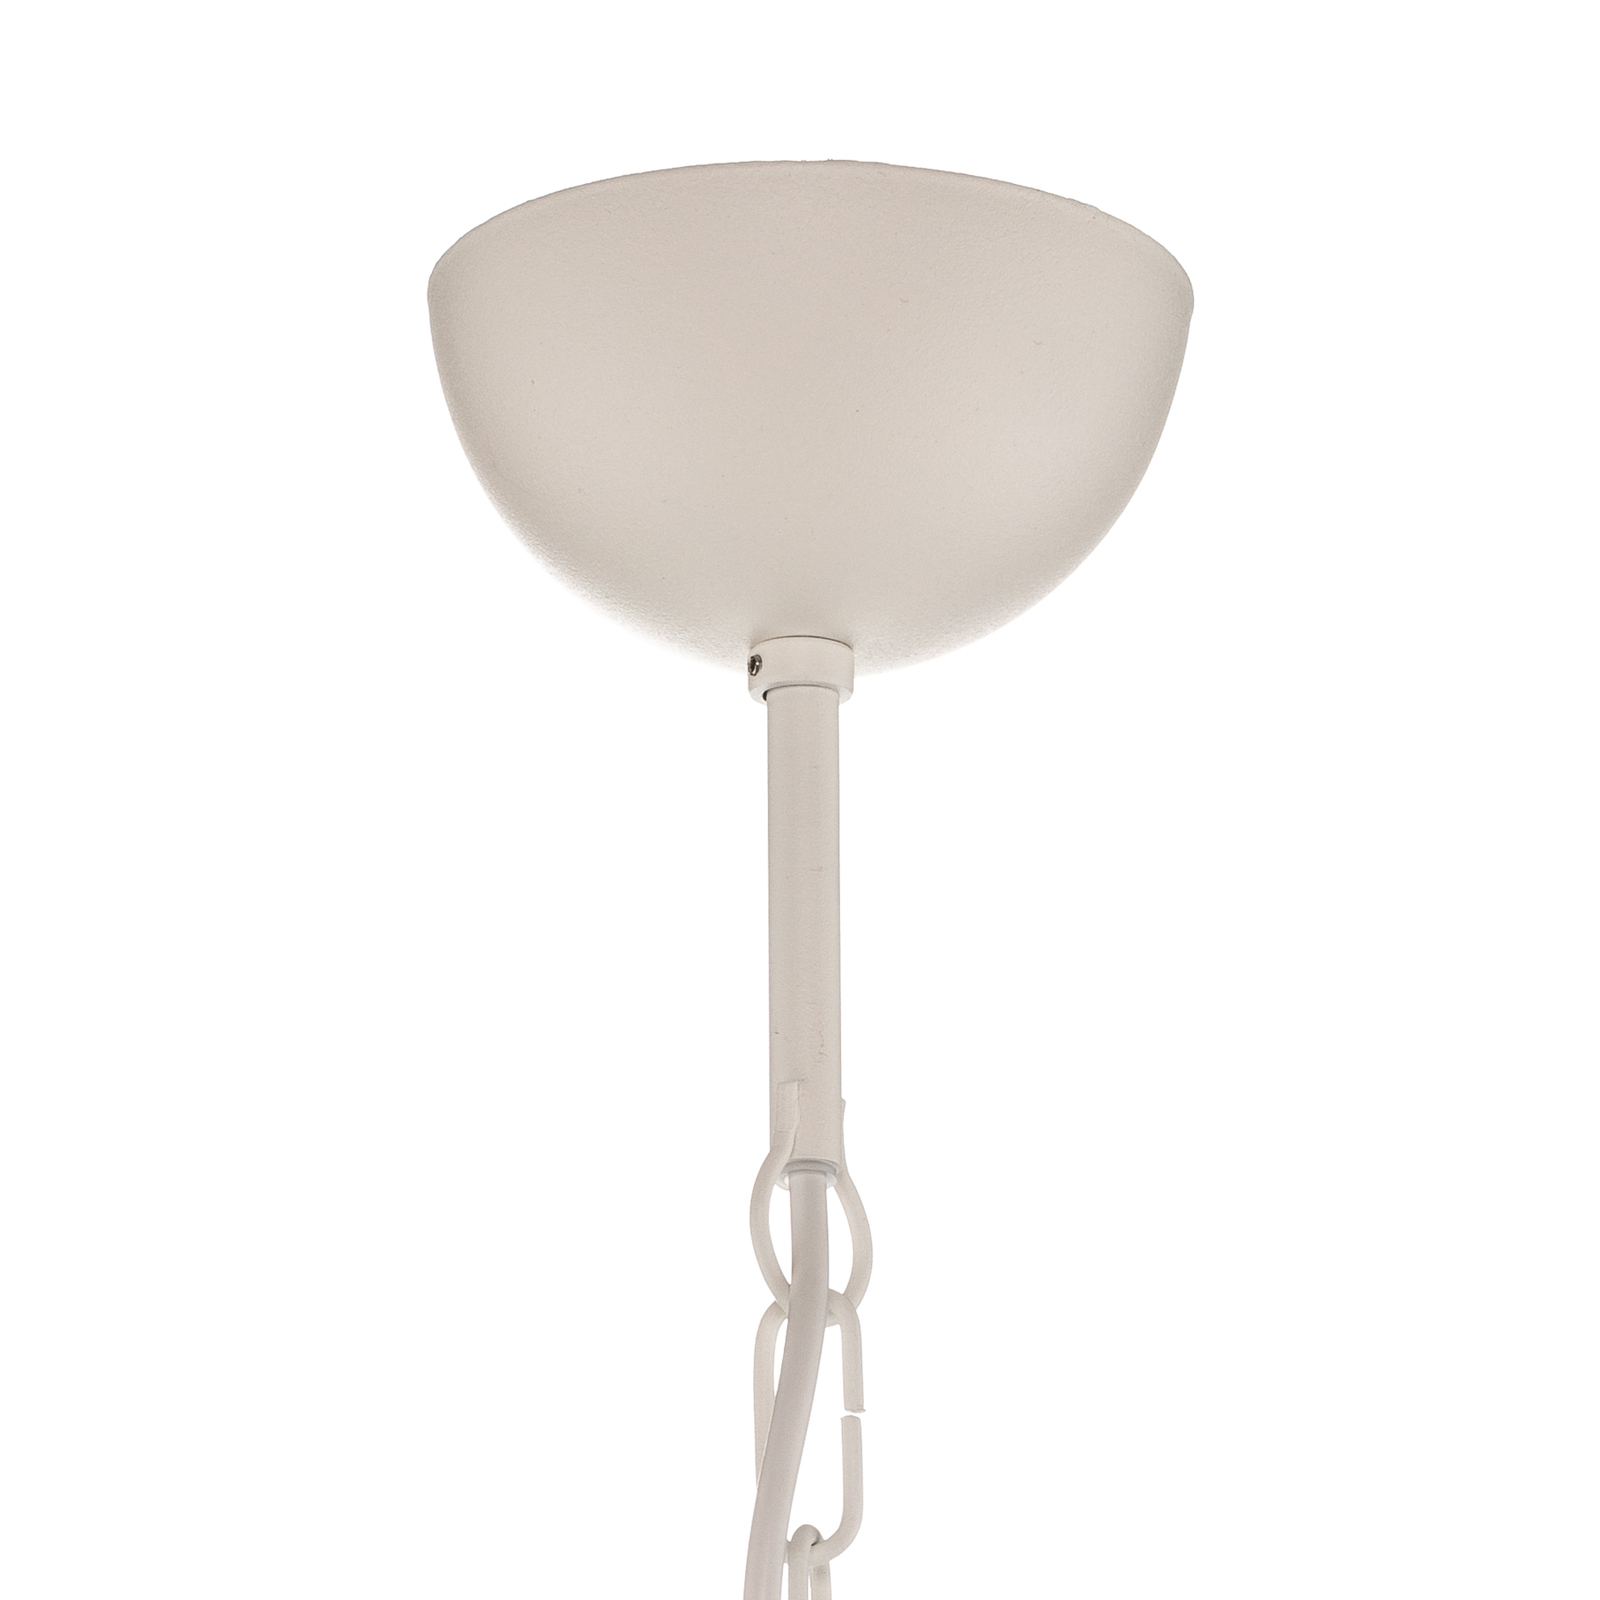 Emoti pendant light, one-bulb, white